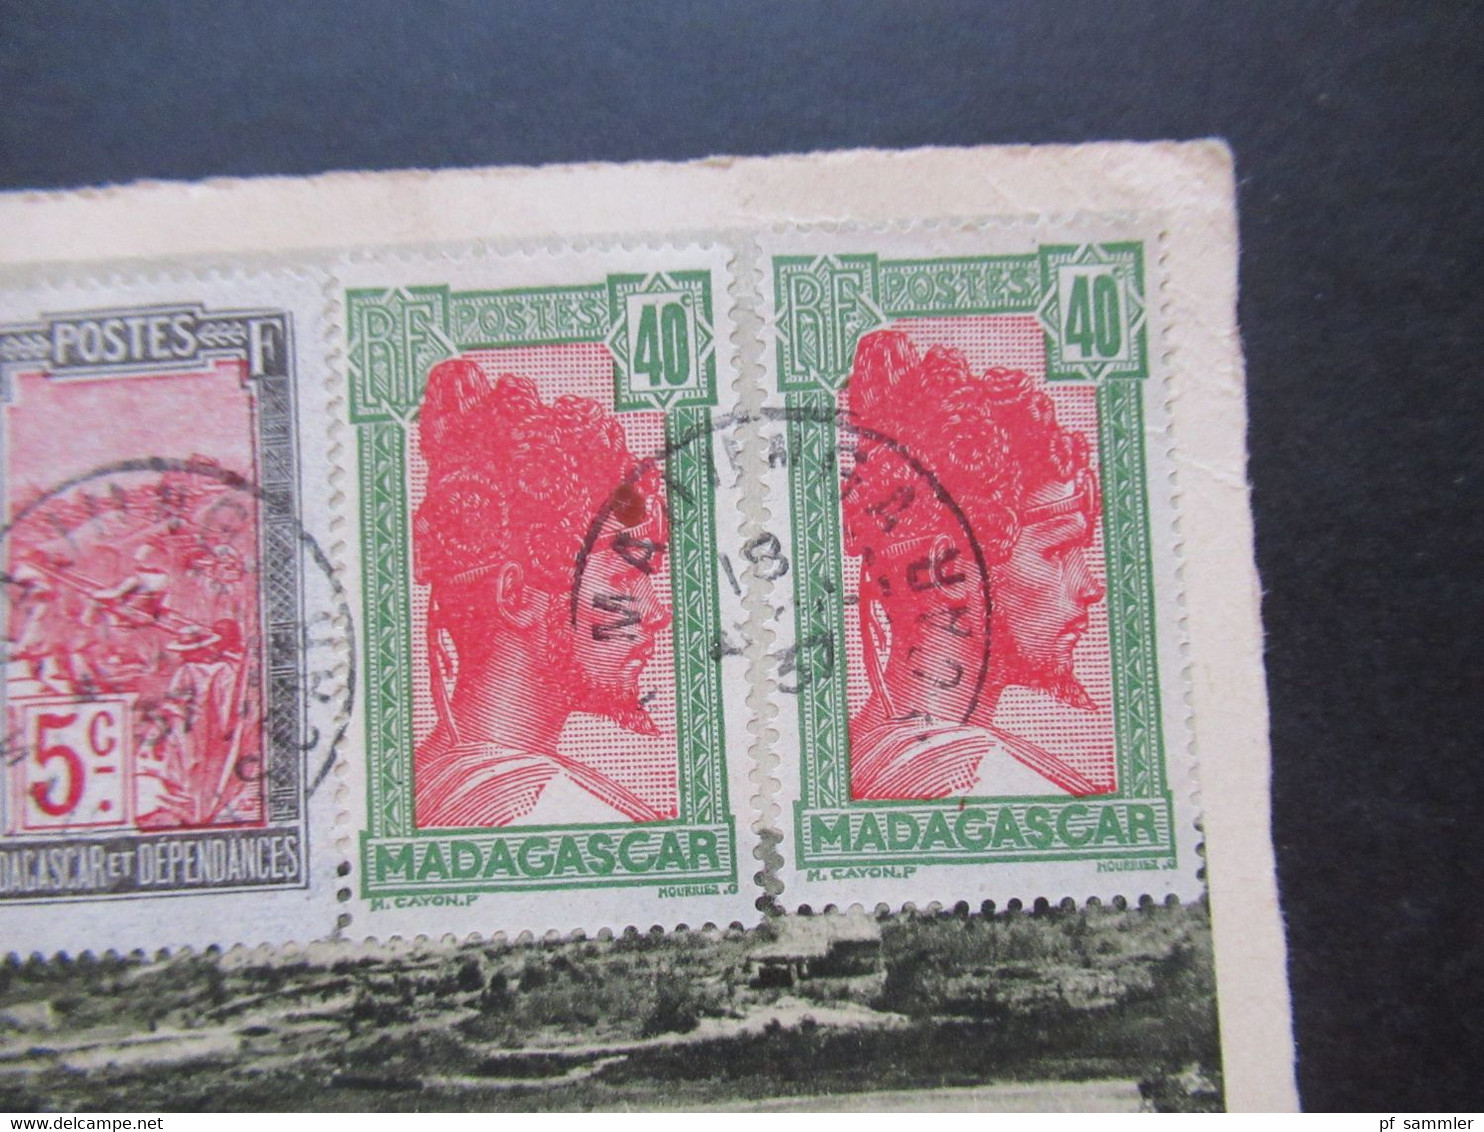 AK 1937 Madagaskar Majunga La Digue Metzinger Bildseitig Frankiert Madagascar Et Dependances PK Nach Hildesheim - Storia Postale